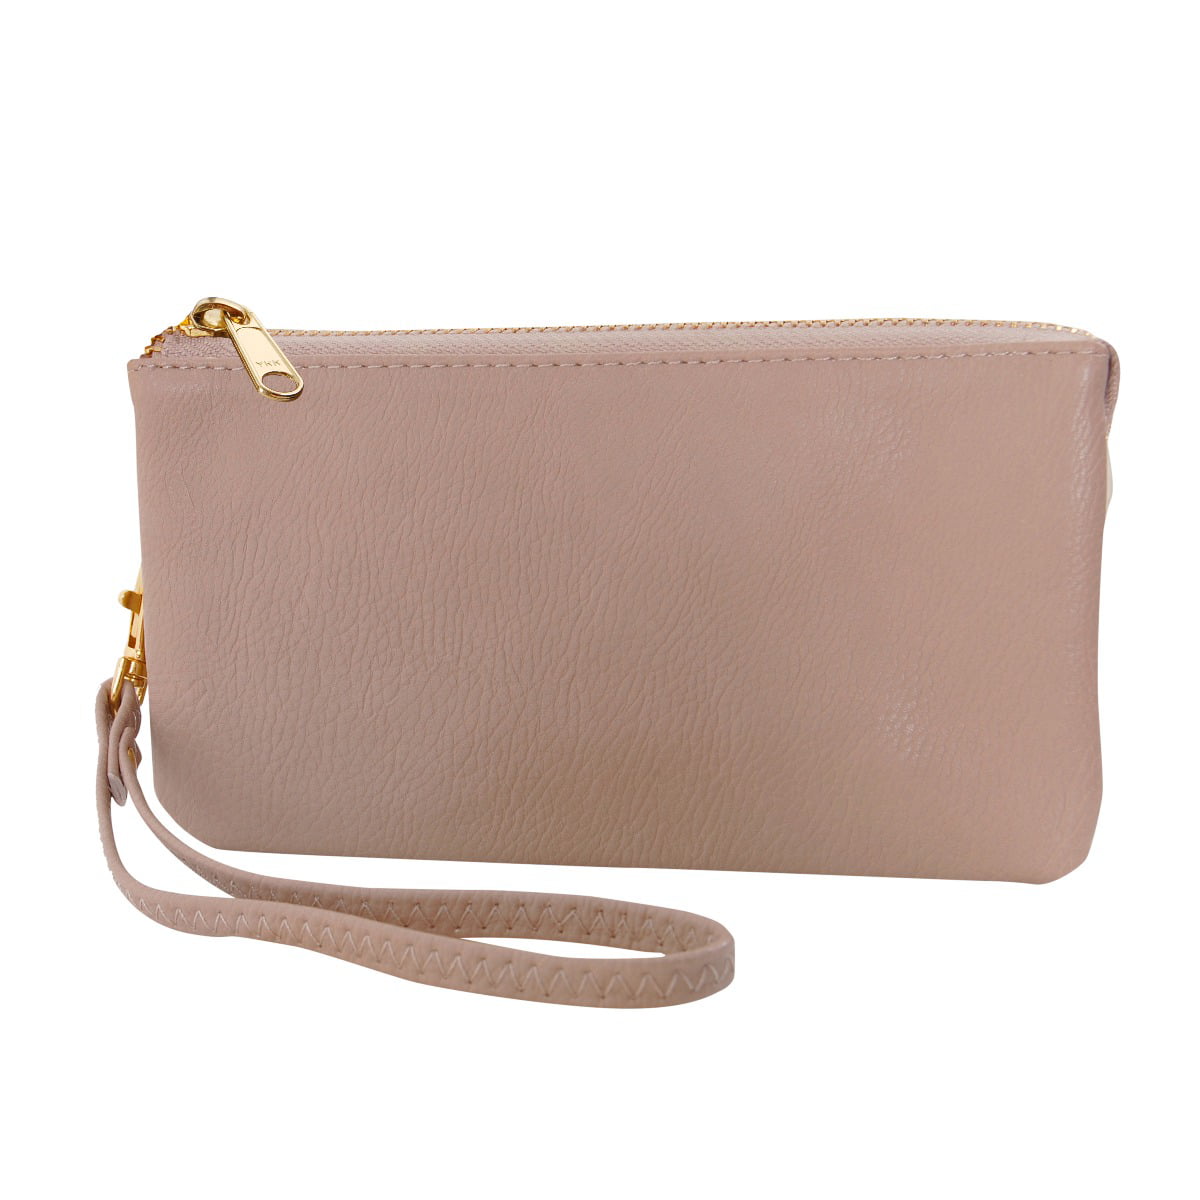 Auony Leather Wristlet Wallet Clutch Bag Zipper Smart Phone Wallet Purse Handbag for Women 